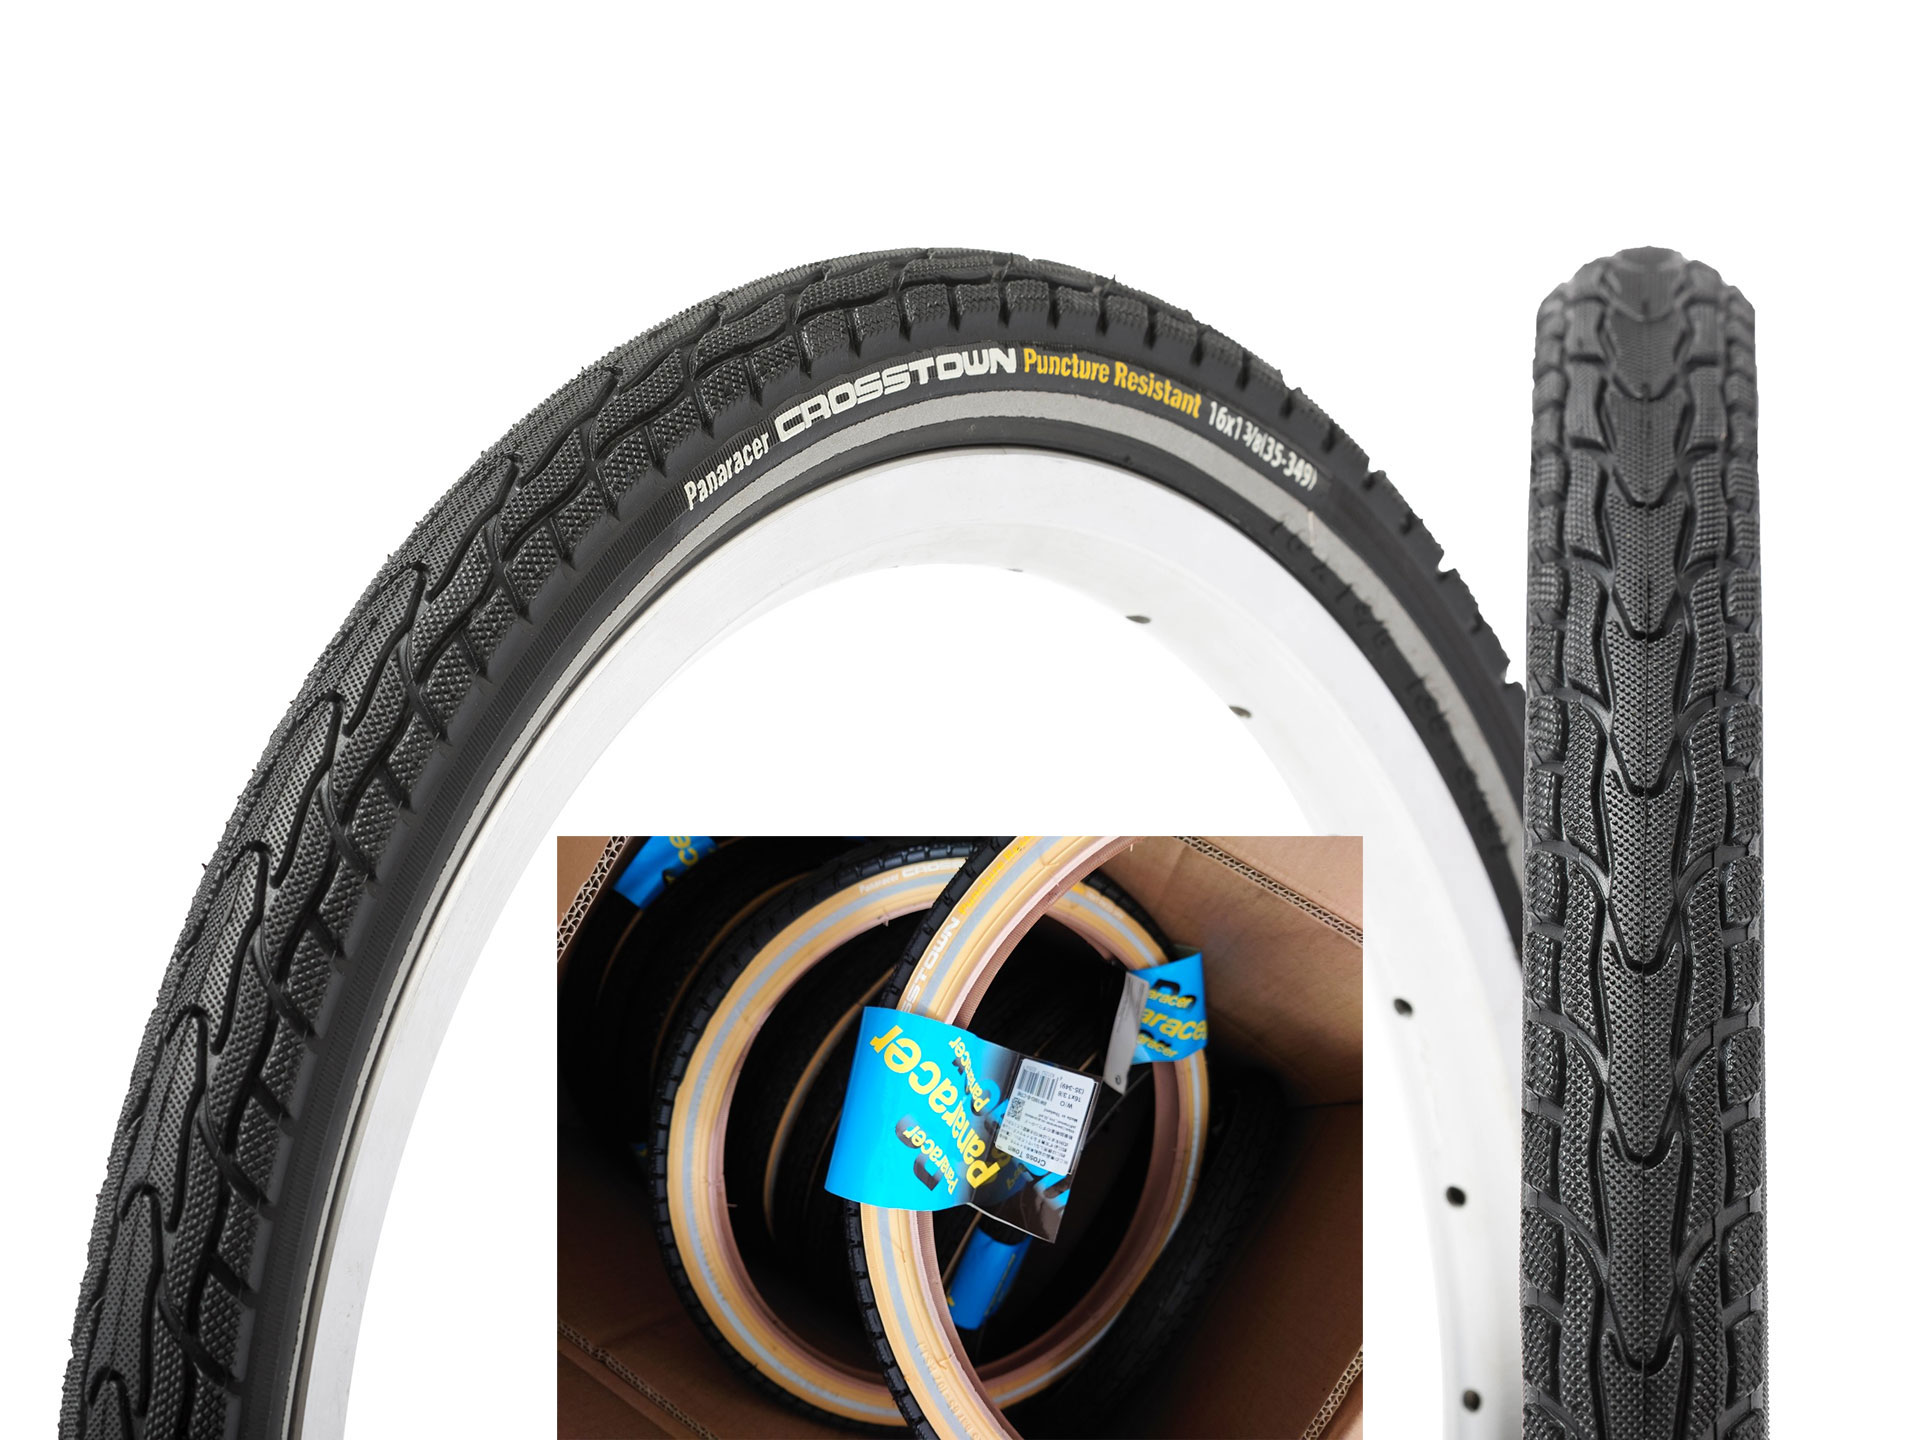 Panaracer Cross Town Punture-Resistant Tire 16X1(3/8) 349 for Brompton